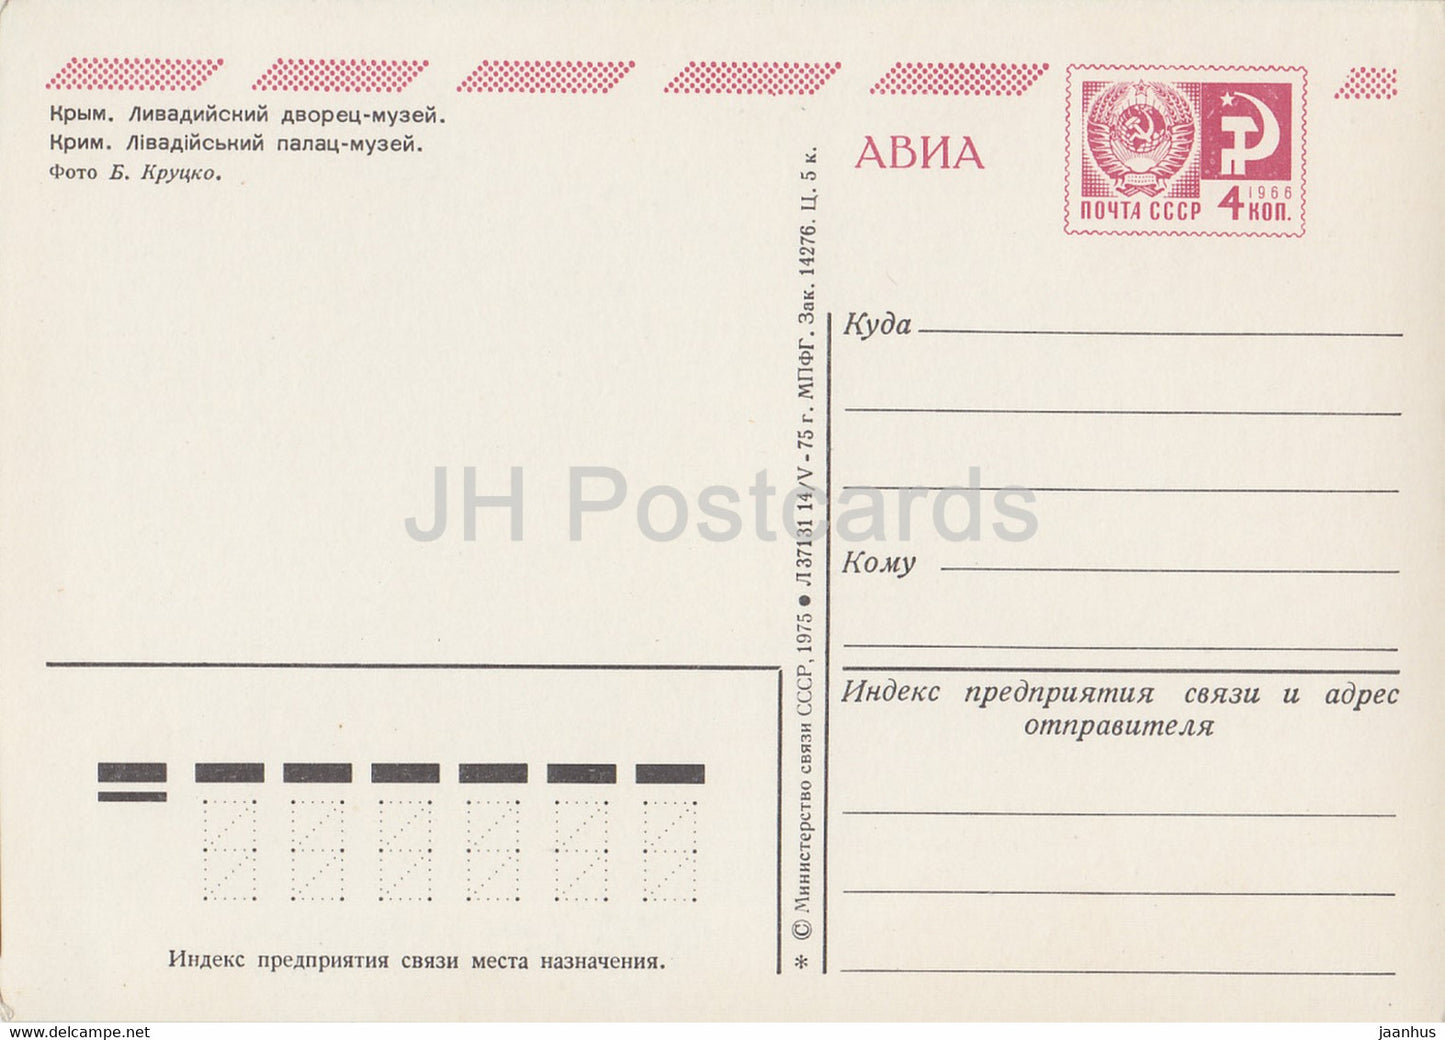 Crimée - Musée du Palais de Livadia - AVIA - entier postal - 1975 - Ukraine URSS - inutilisé